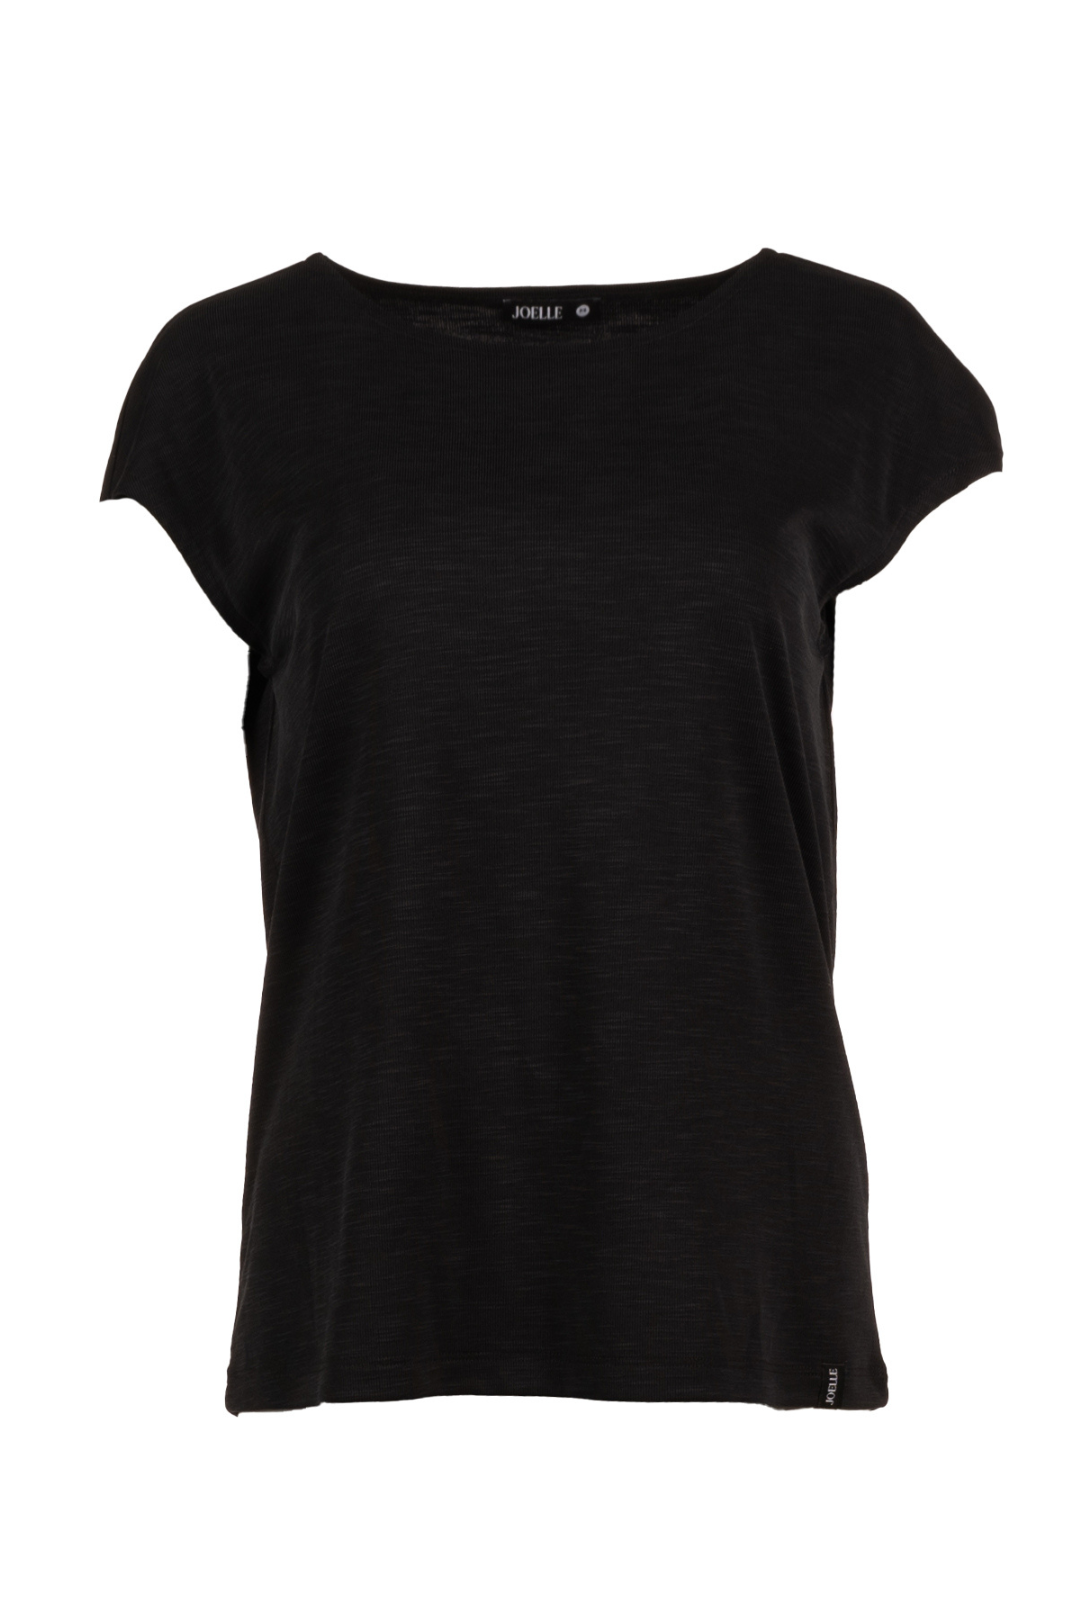 Black cap sleeve t-shirt | Waverly